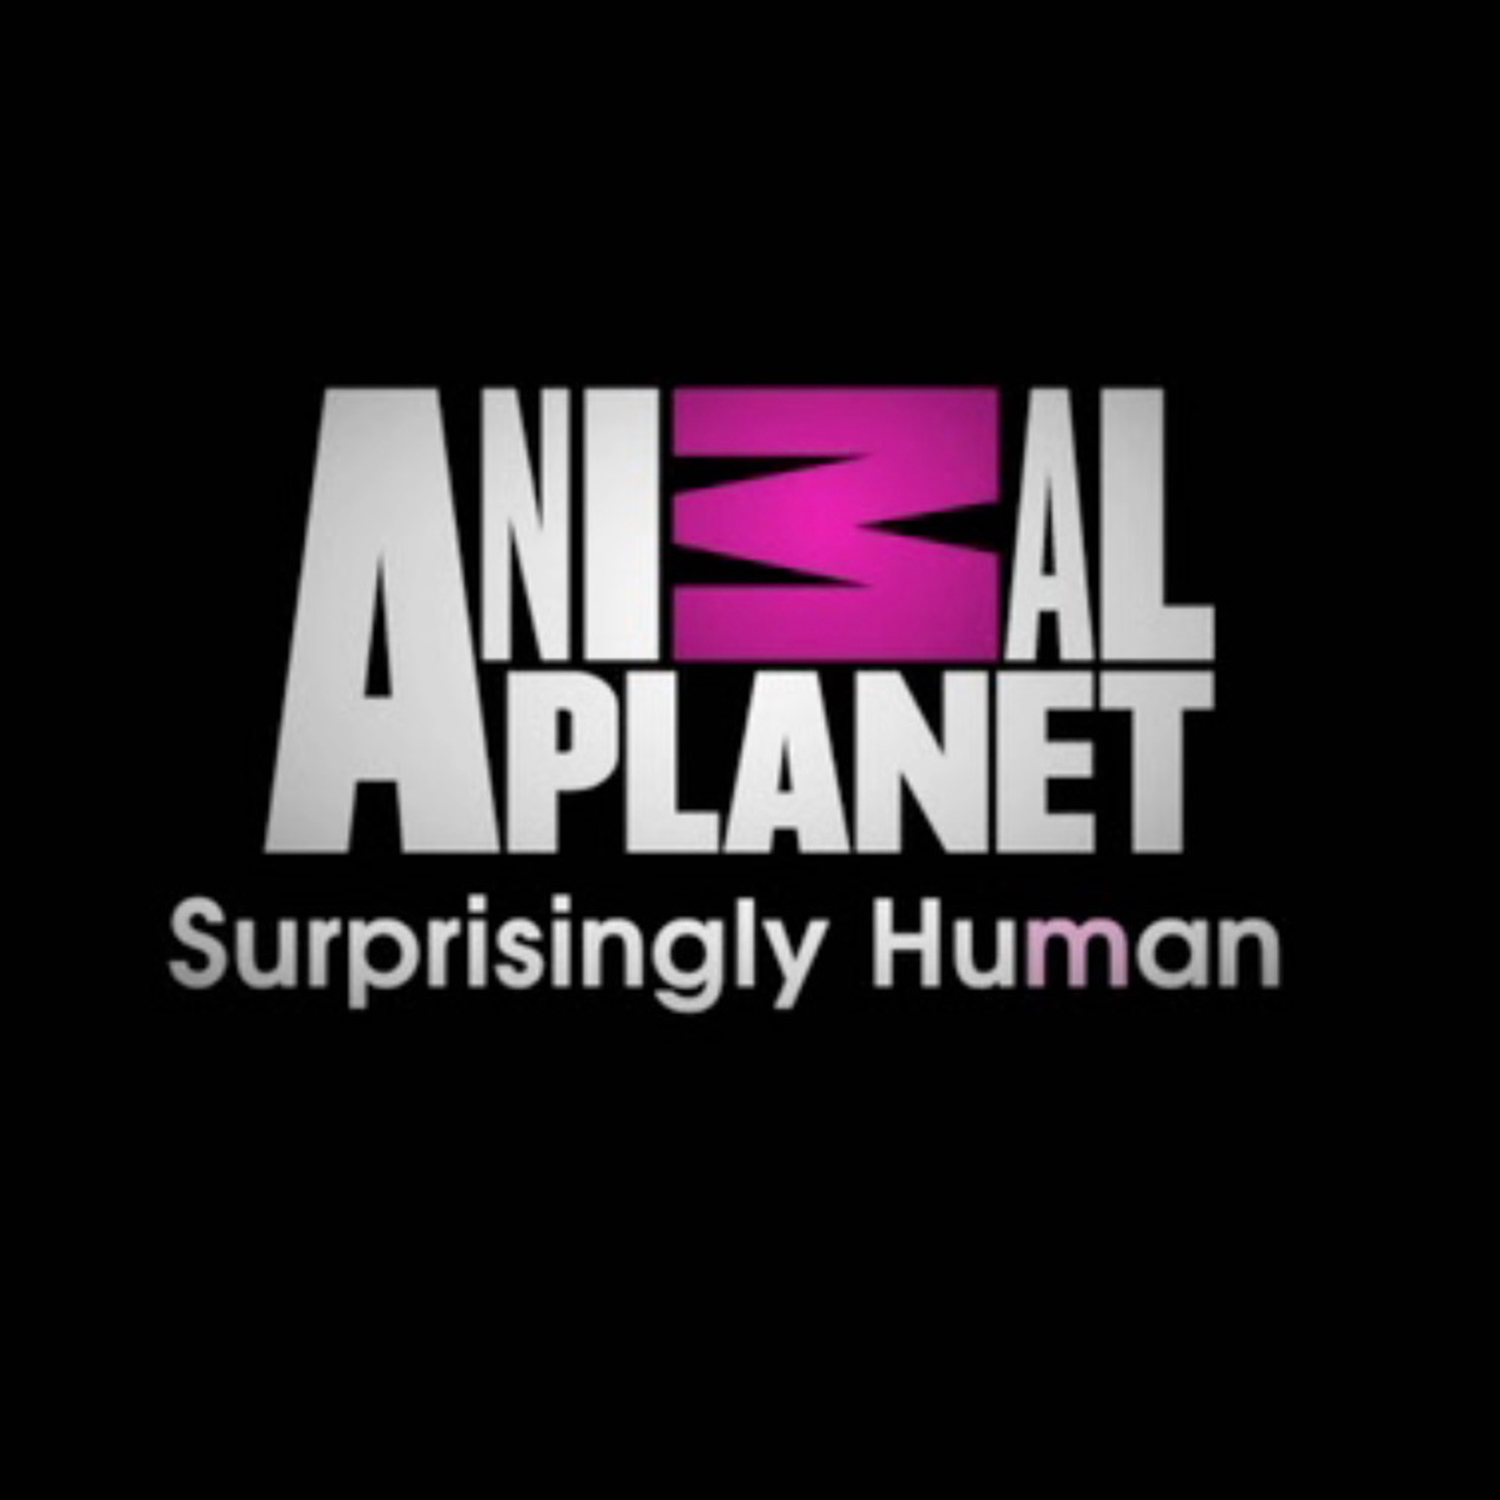 ANIMAL PLANET (NETWORK BRANDING PROMO)